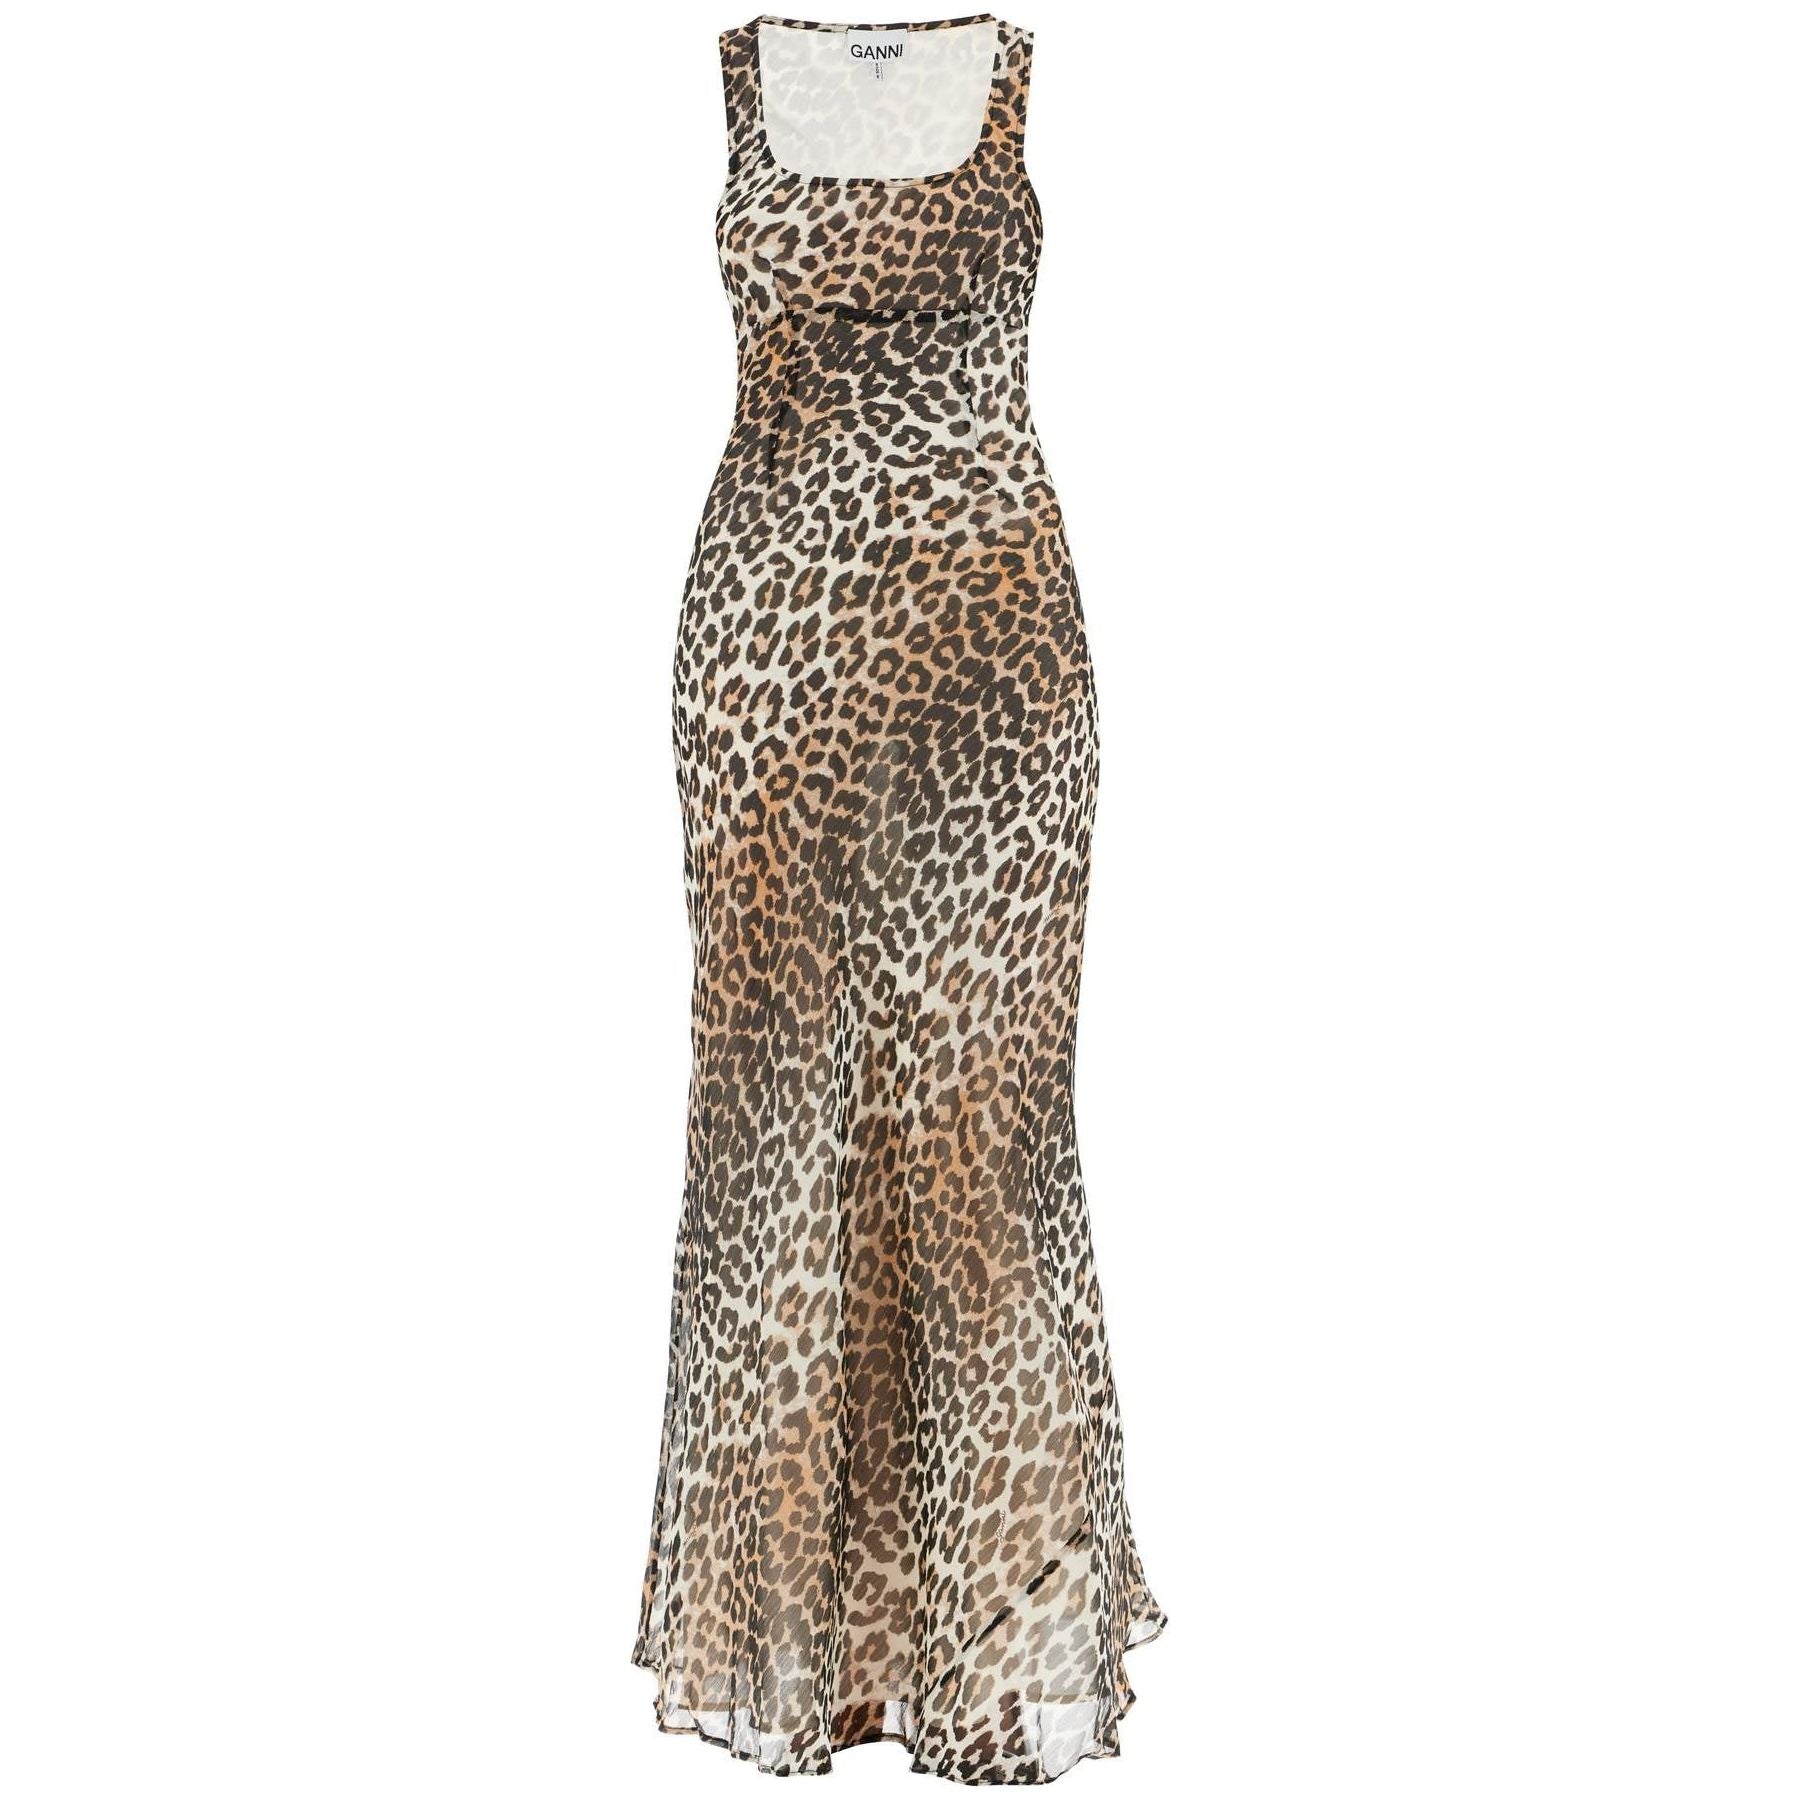 Printed Leopard Recycled Chiffon Maxi Dress